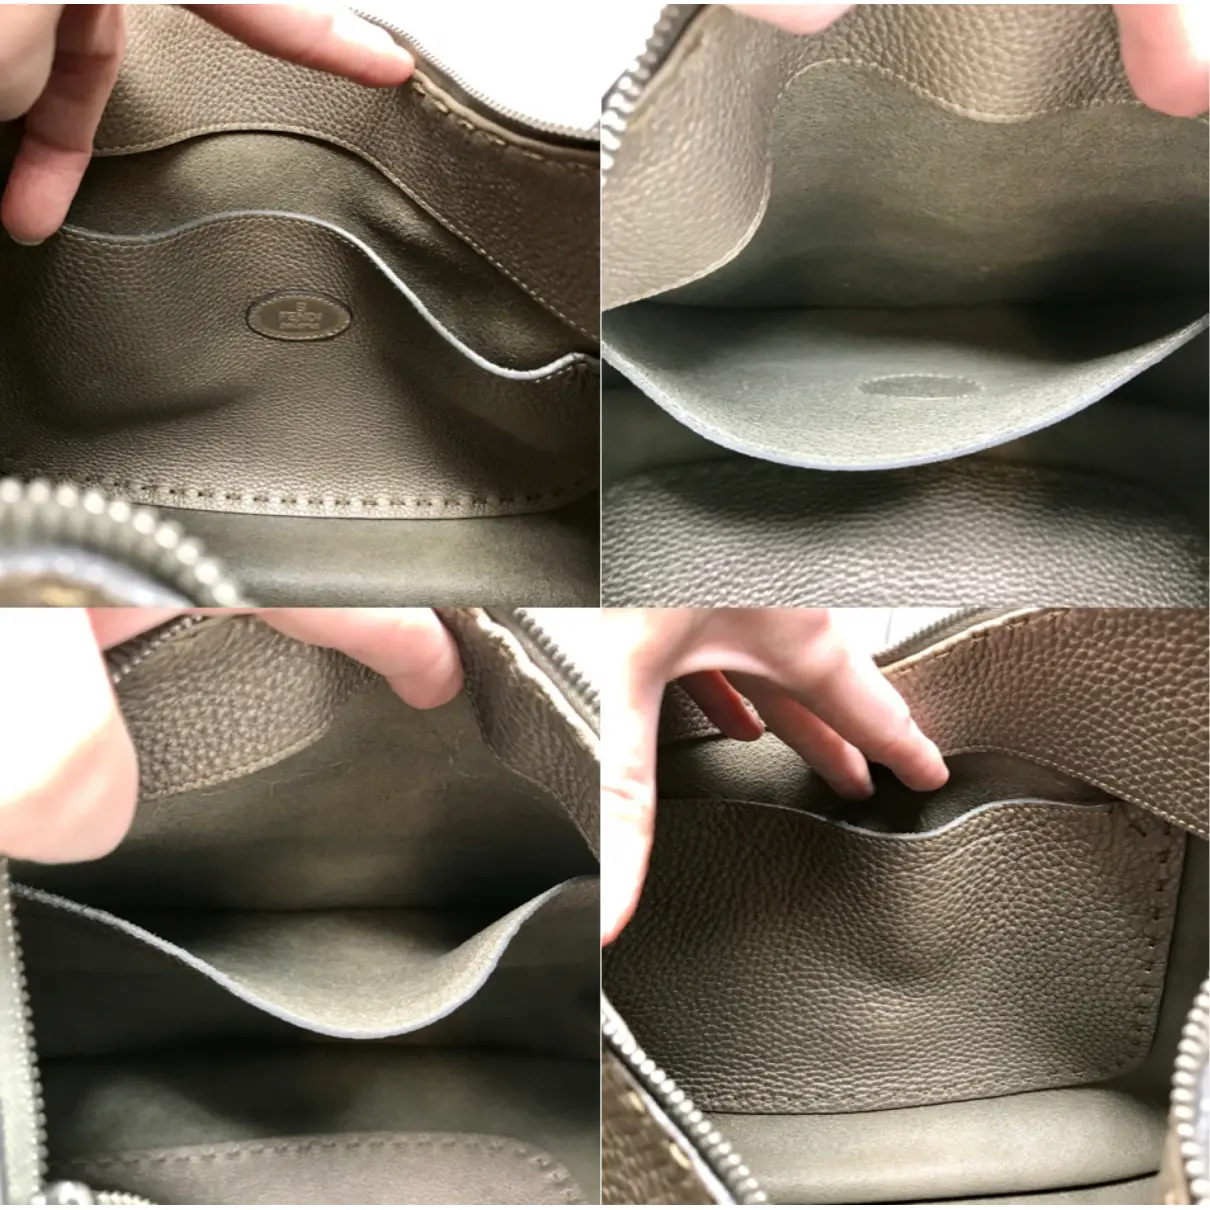 Buy Fendi Anna Selleria leather handbag online